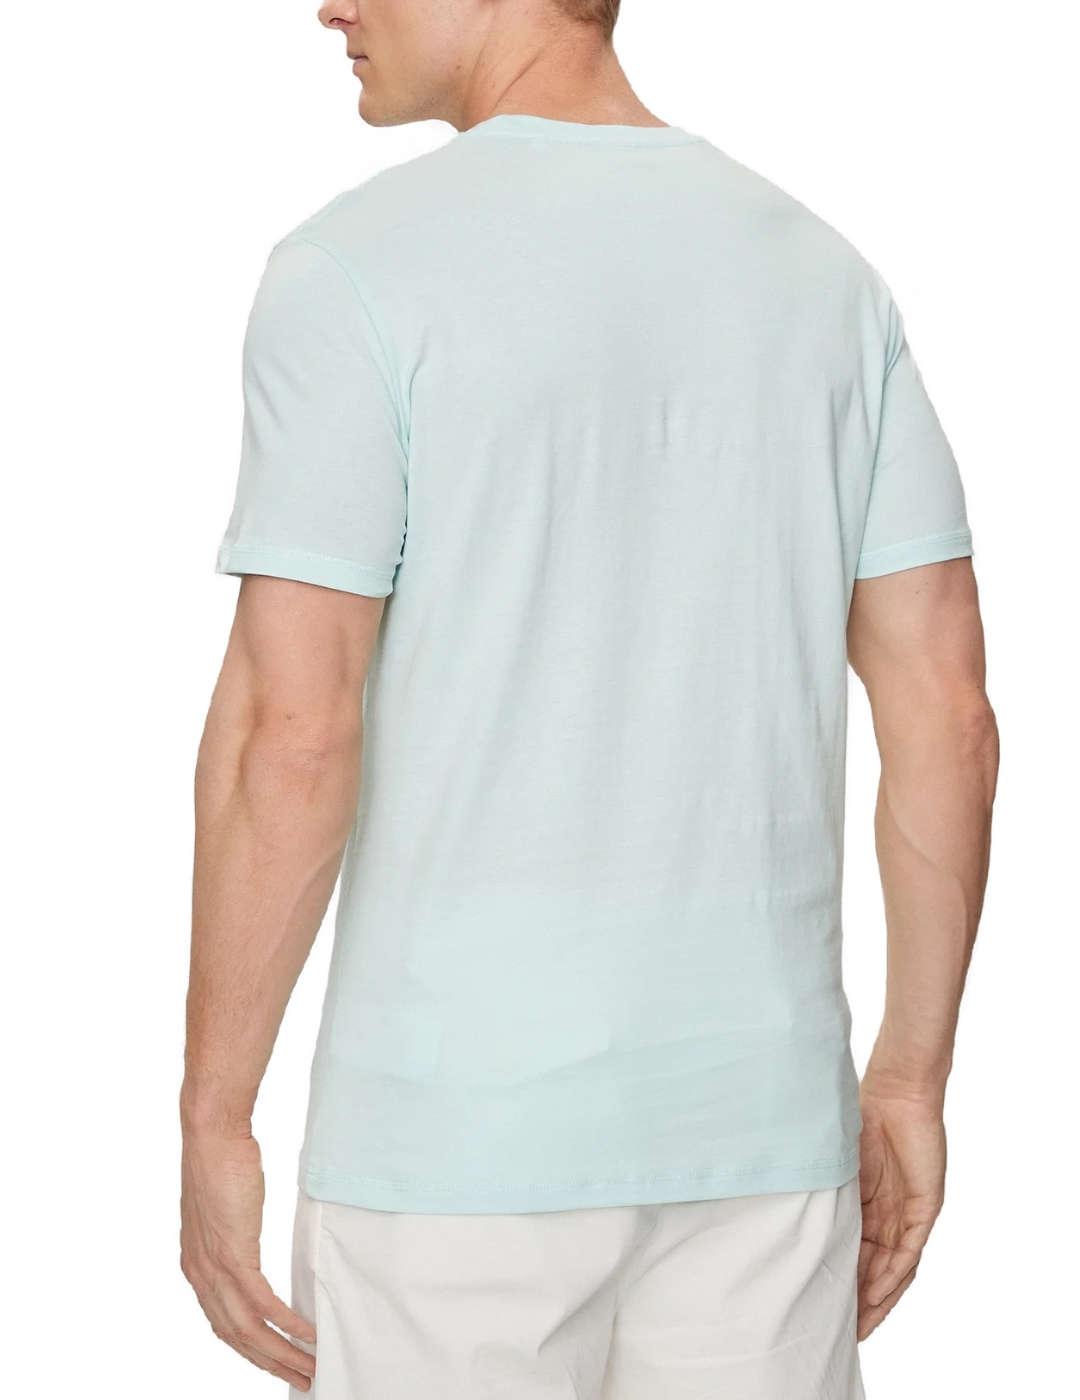 Camiseta Guess Multicolor celeste manga corta para hombre